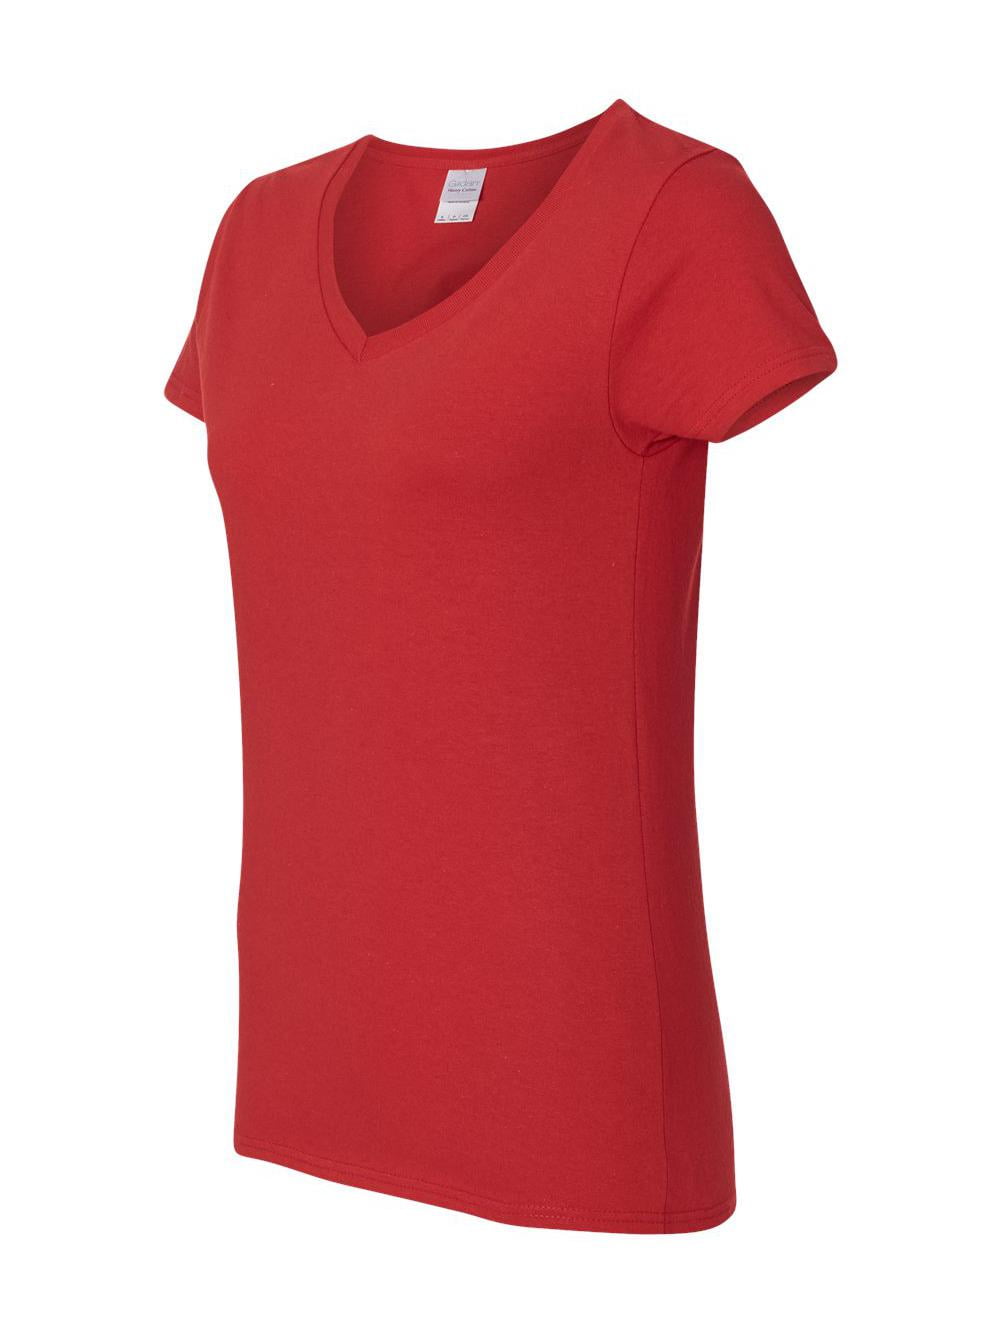 Cotton 5V00L T-Shirt Women\'s Red Size: - - - Gildan - L V-Neck Heavy